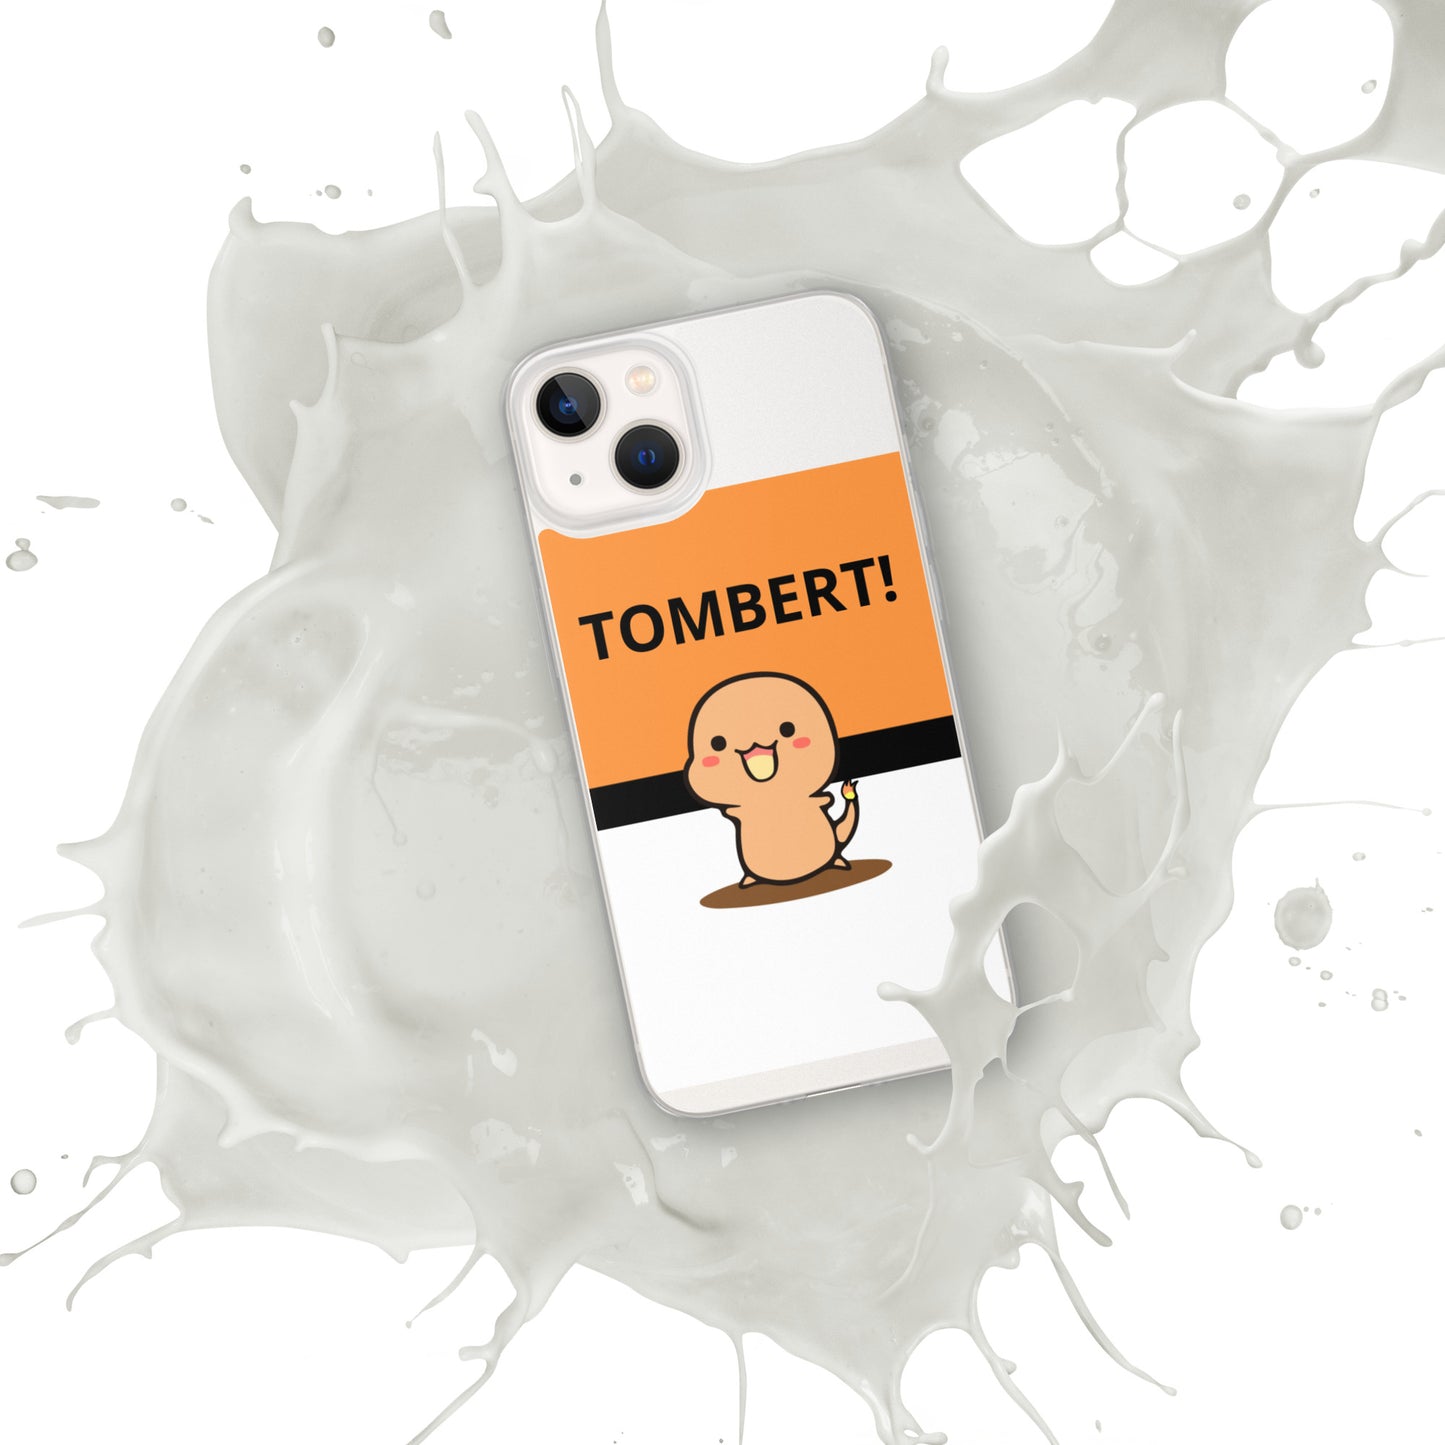 Tombert The iPhone Case!